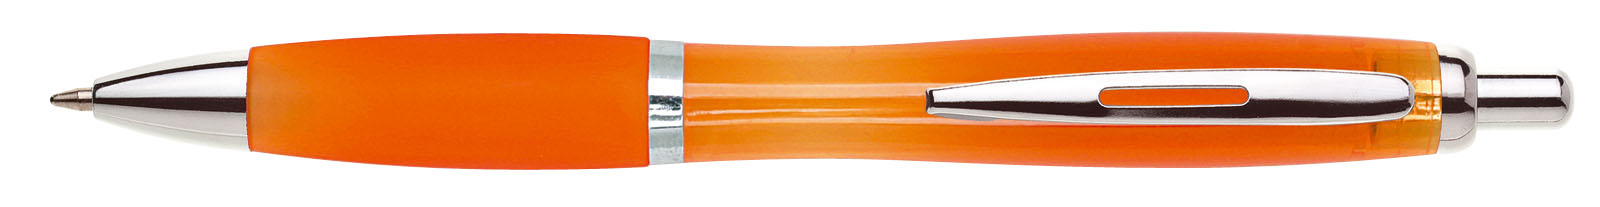 Propiska plast ULTA, oranžová